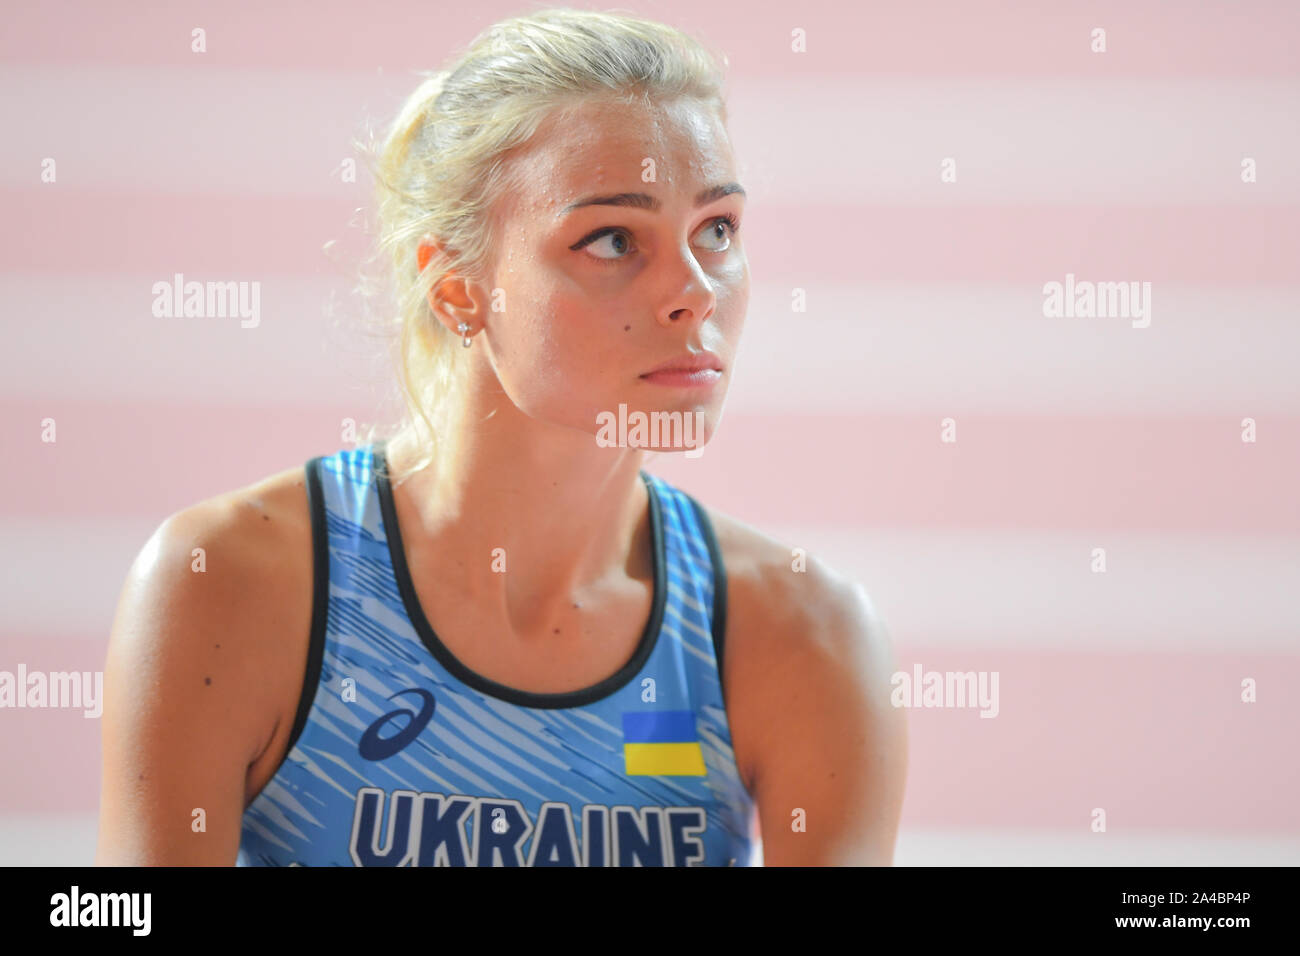 Yuliya Levchenko (Ukraine). High Jump Women finals. IAAF World Athletics Championships, Doha 2019 Stock Photo